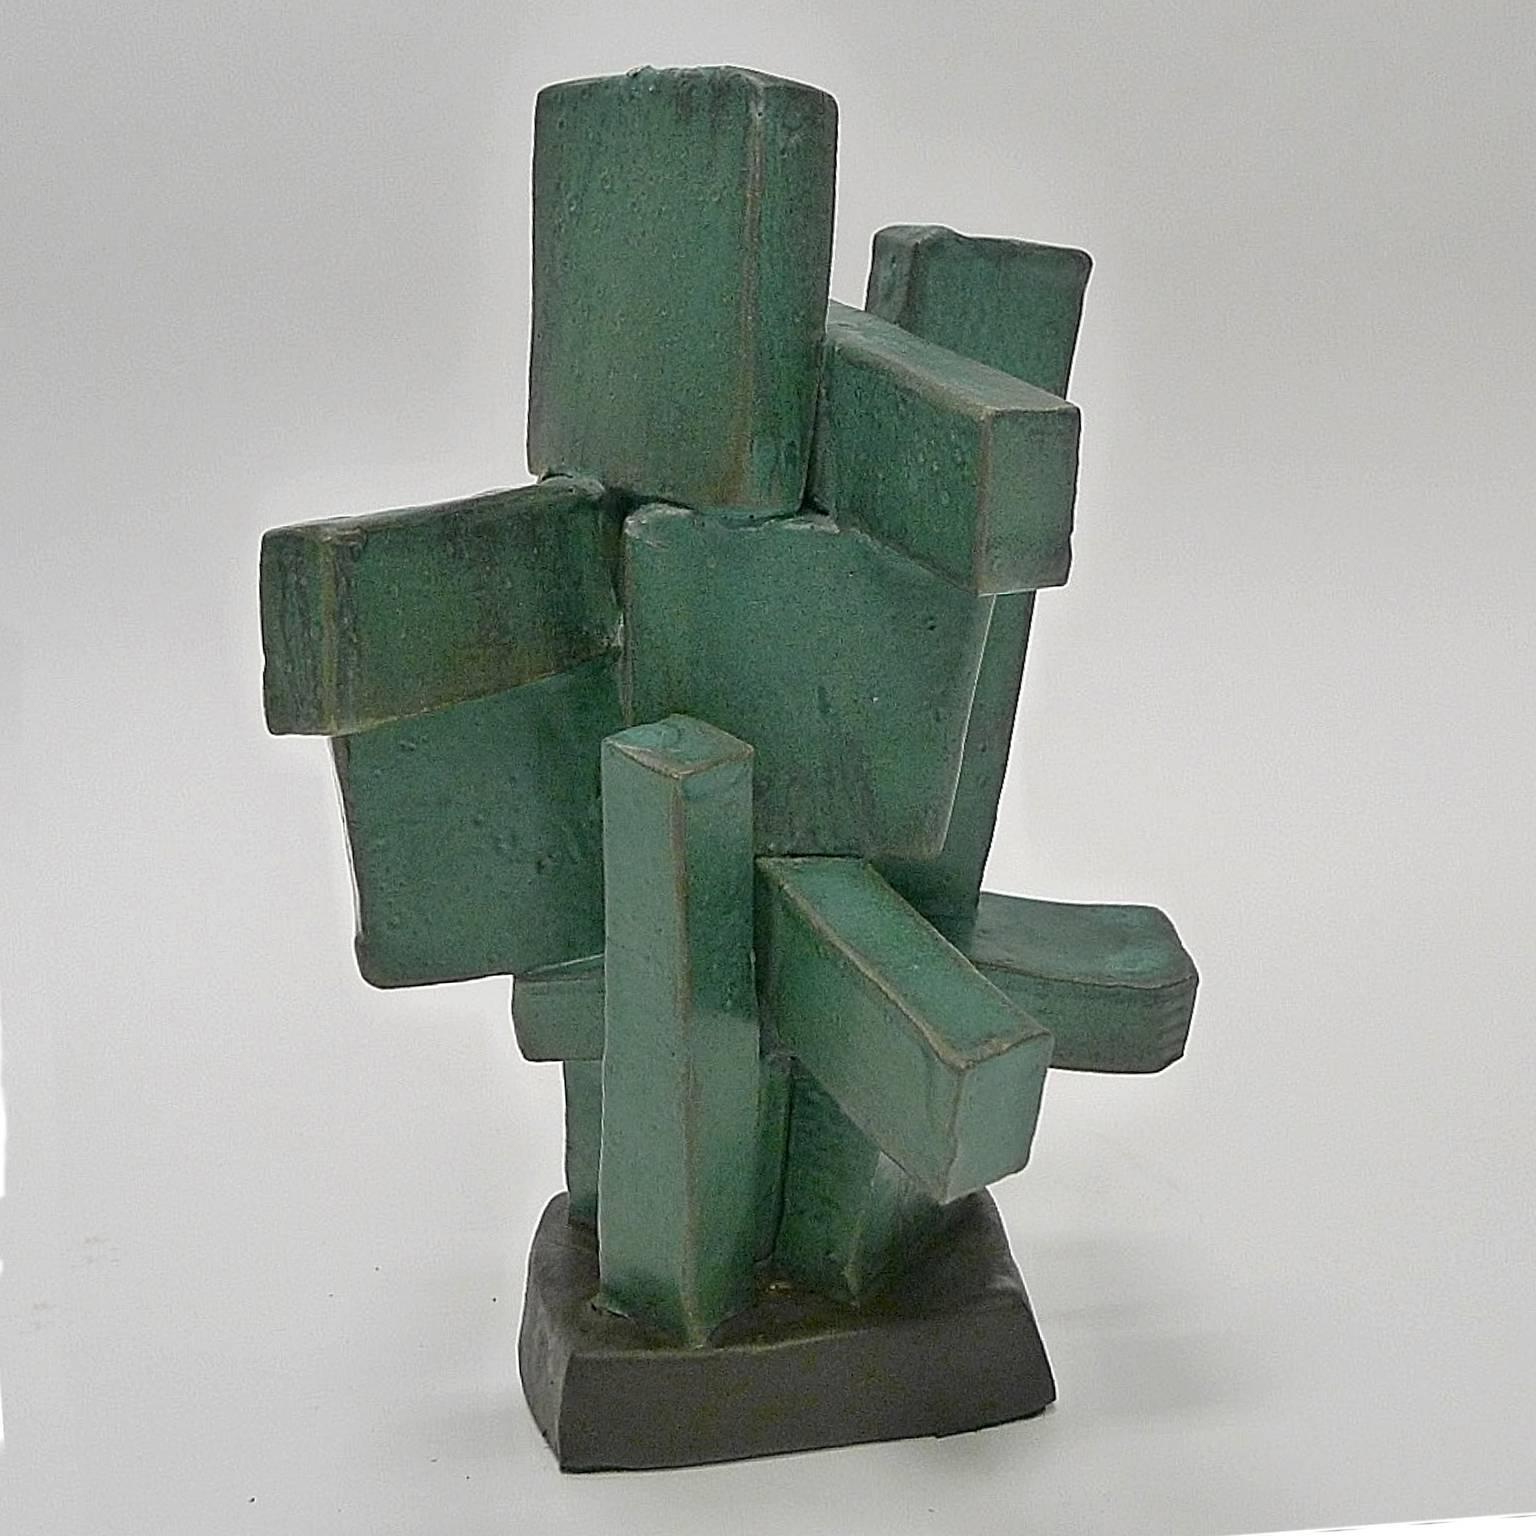 Contemporary Modernist TOTEM Ceramic Sculpture in Organic Green Glaze by Judy Engel